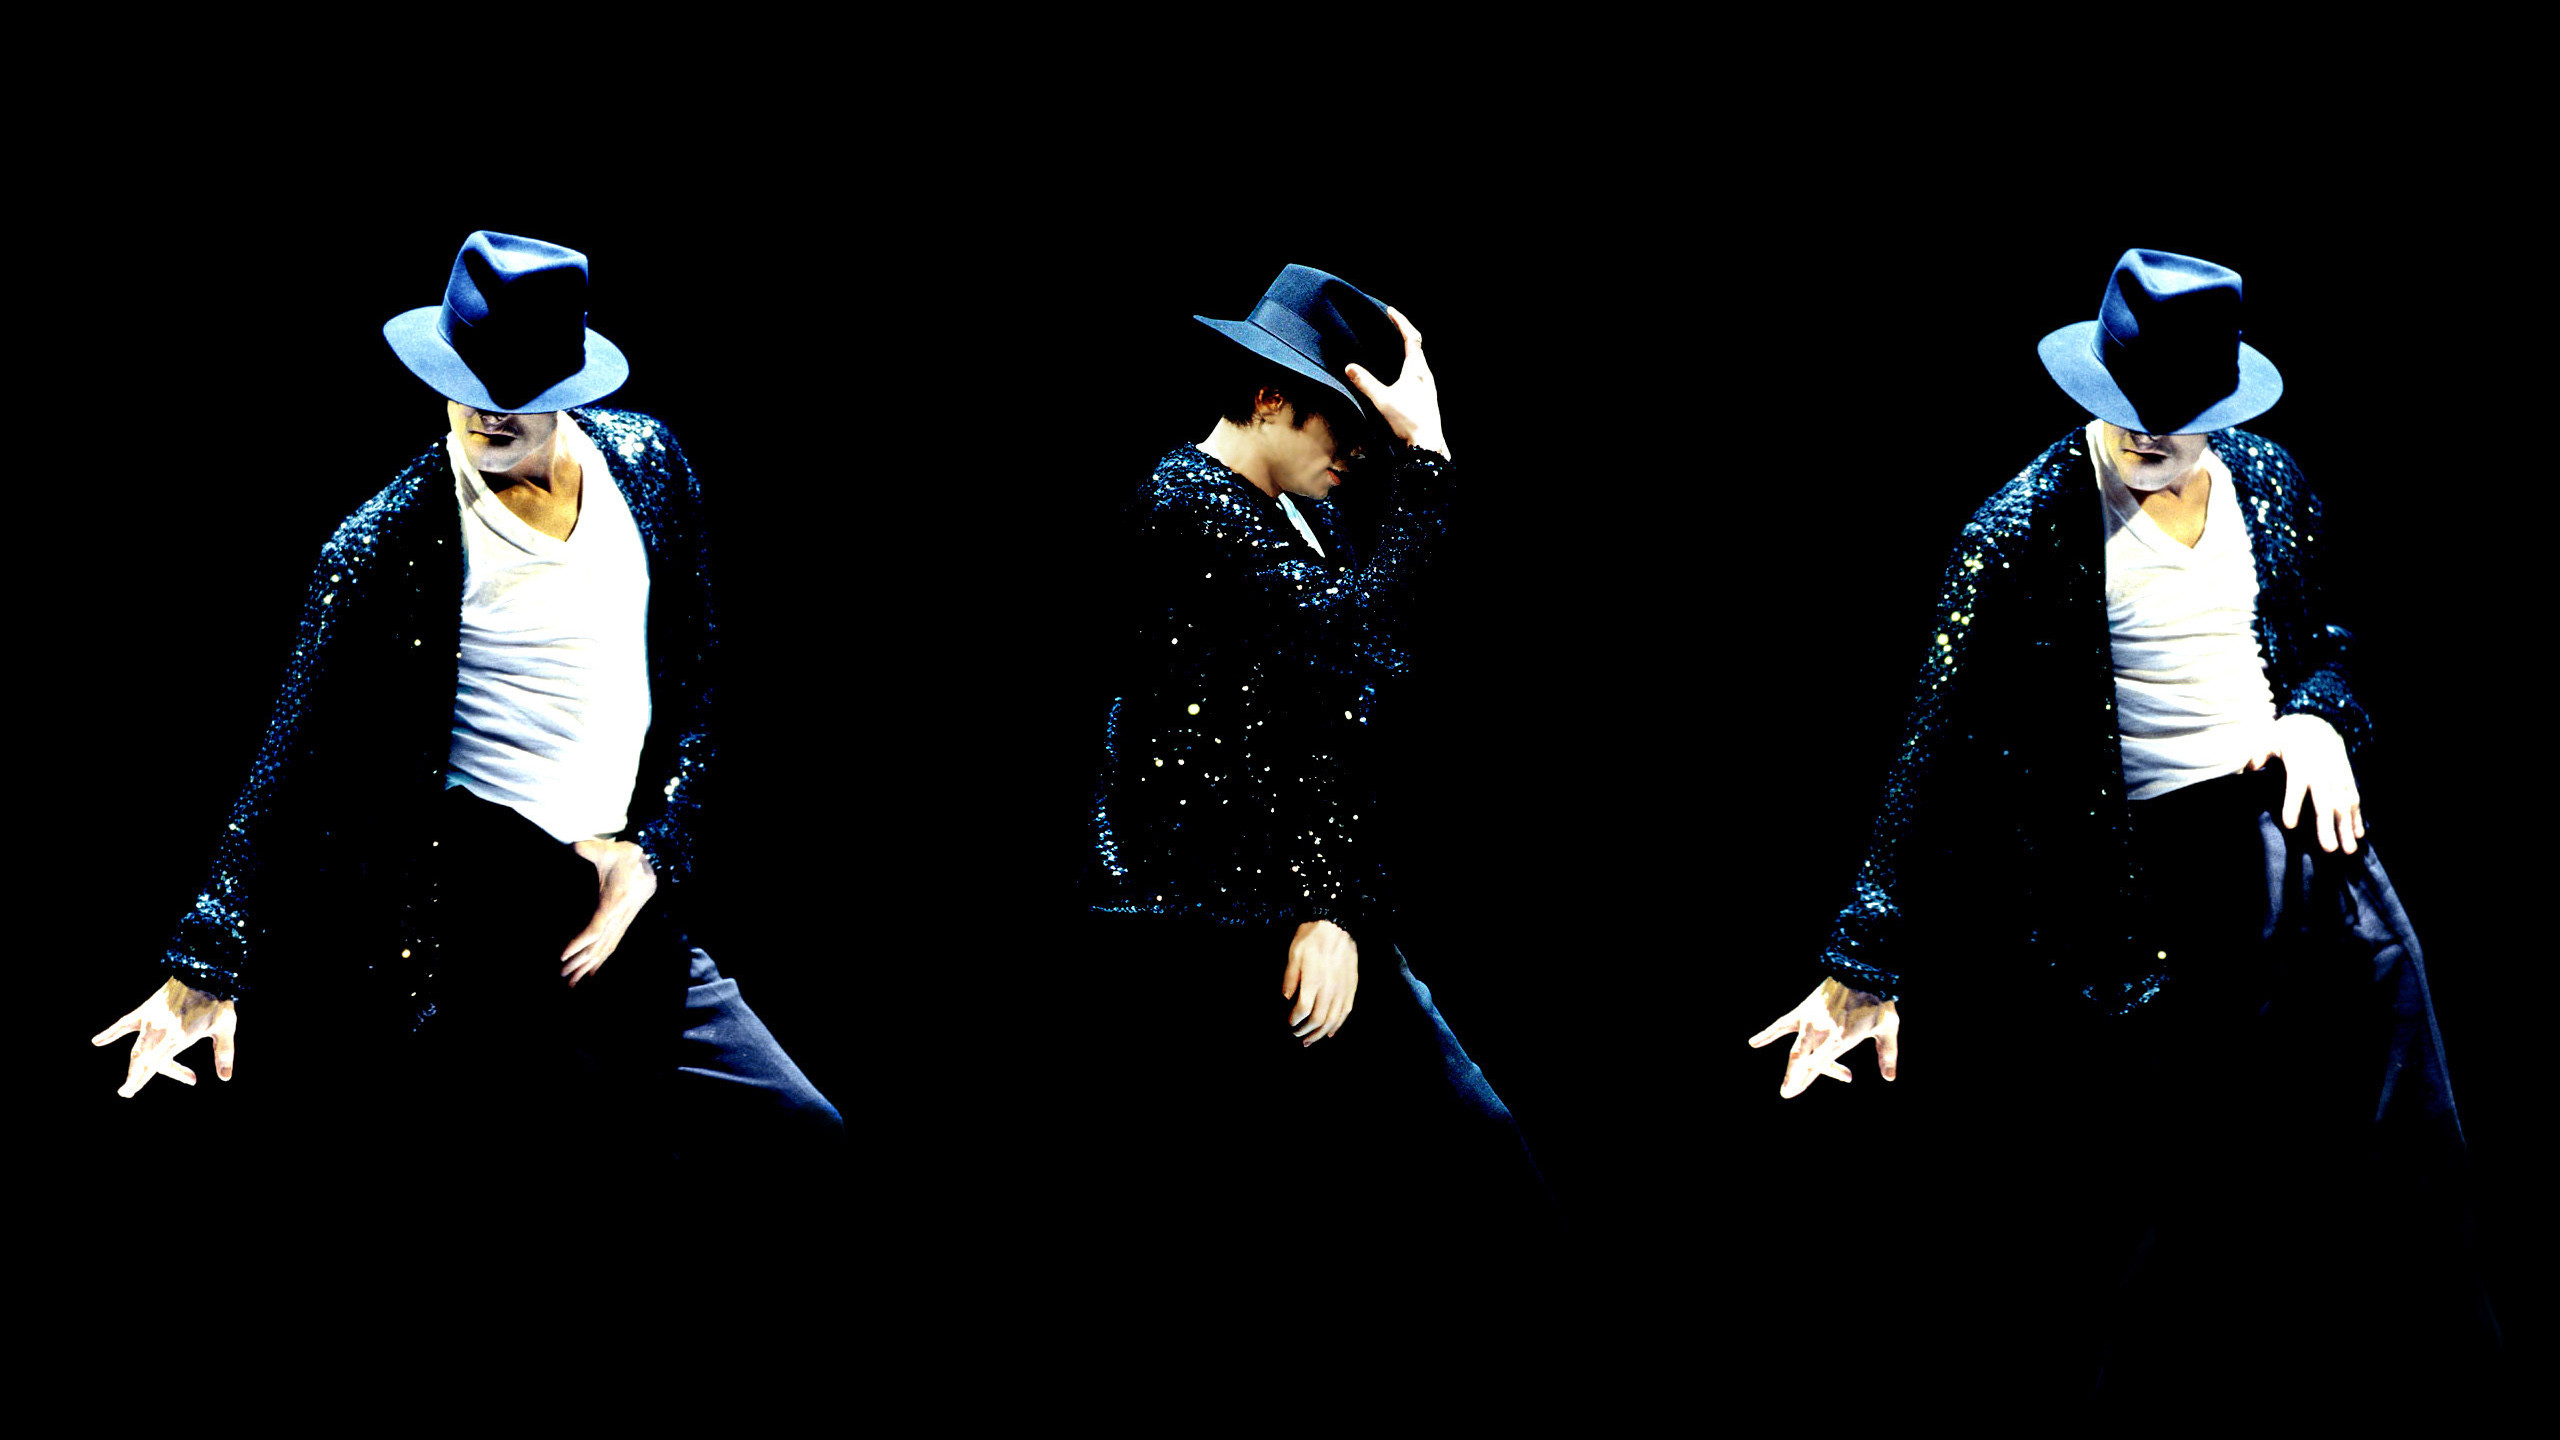 2560x1440 Px Michael Jackson Widescreen Image Super Backgrounds V 865 2560x1440